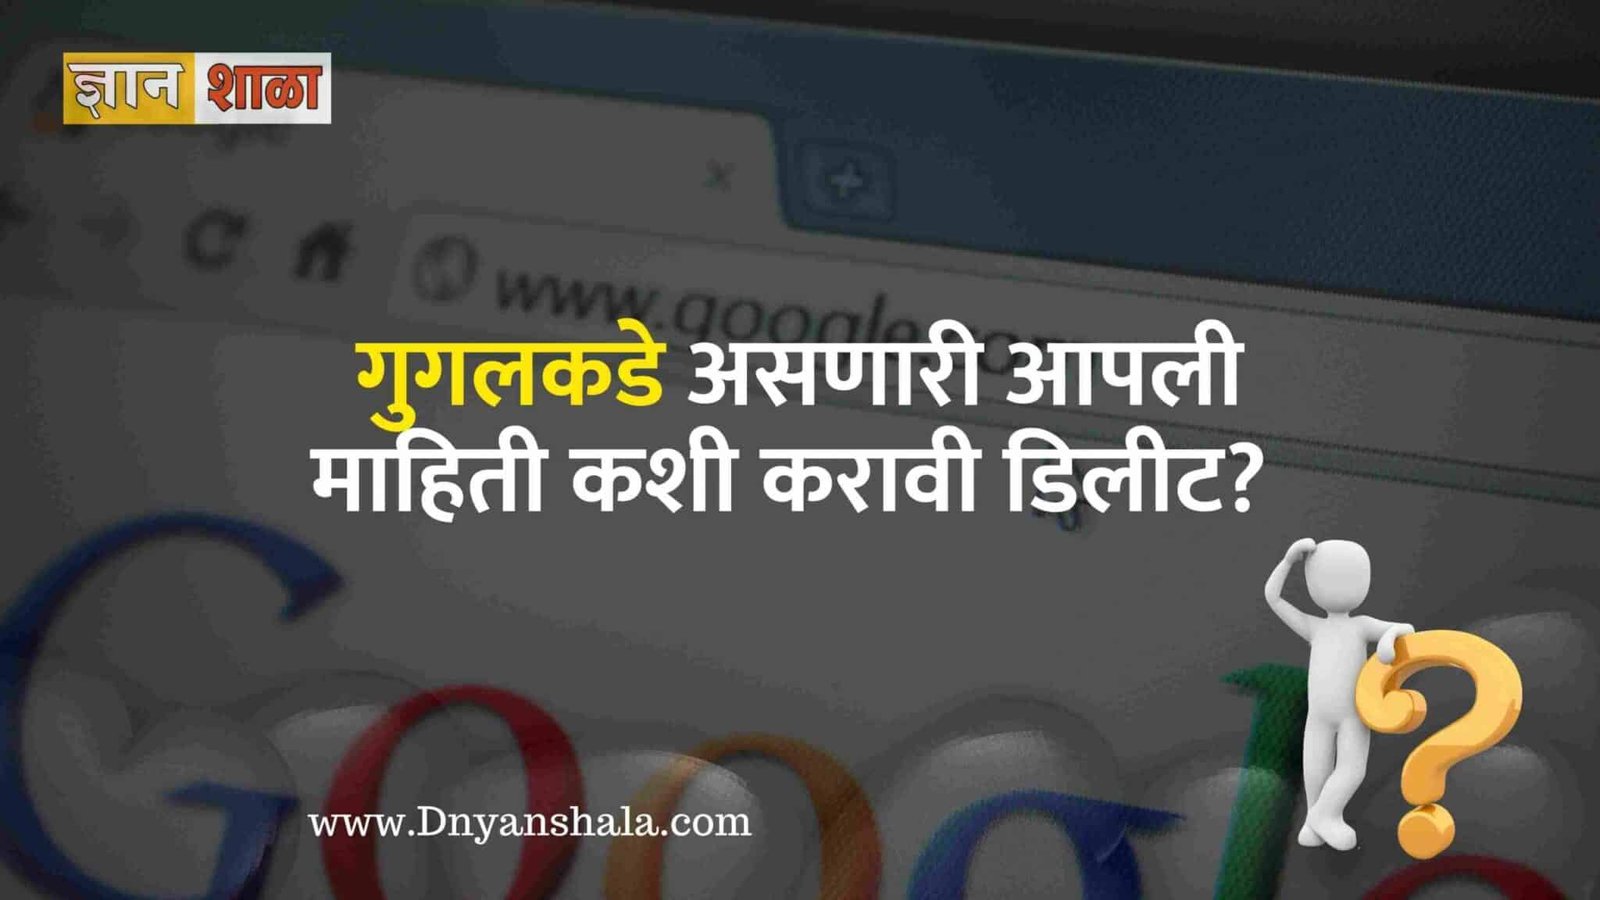 How to delete google history in marathi